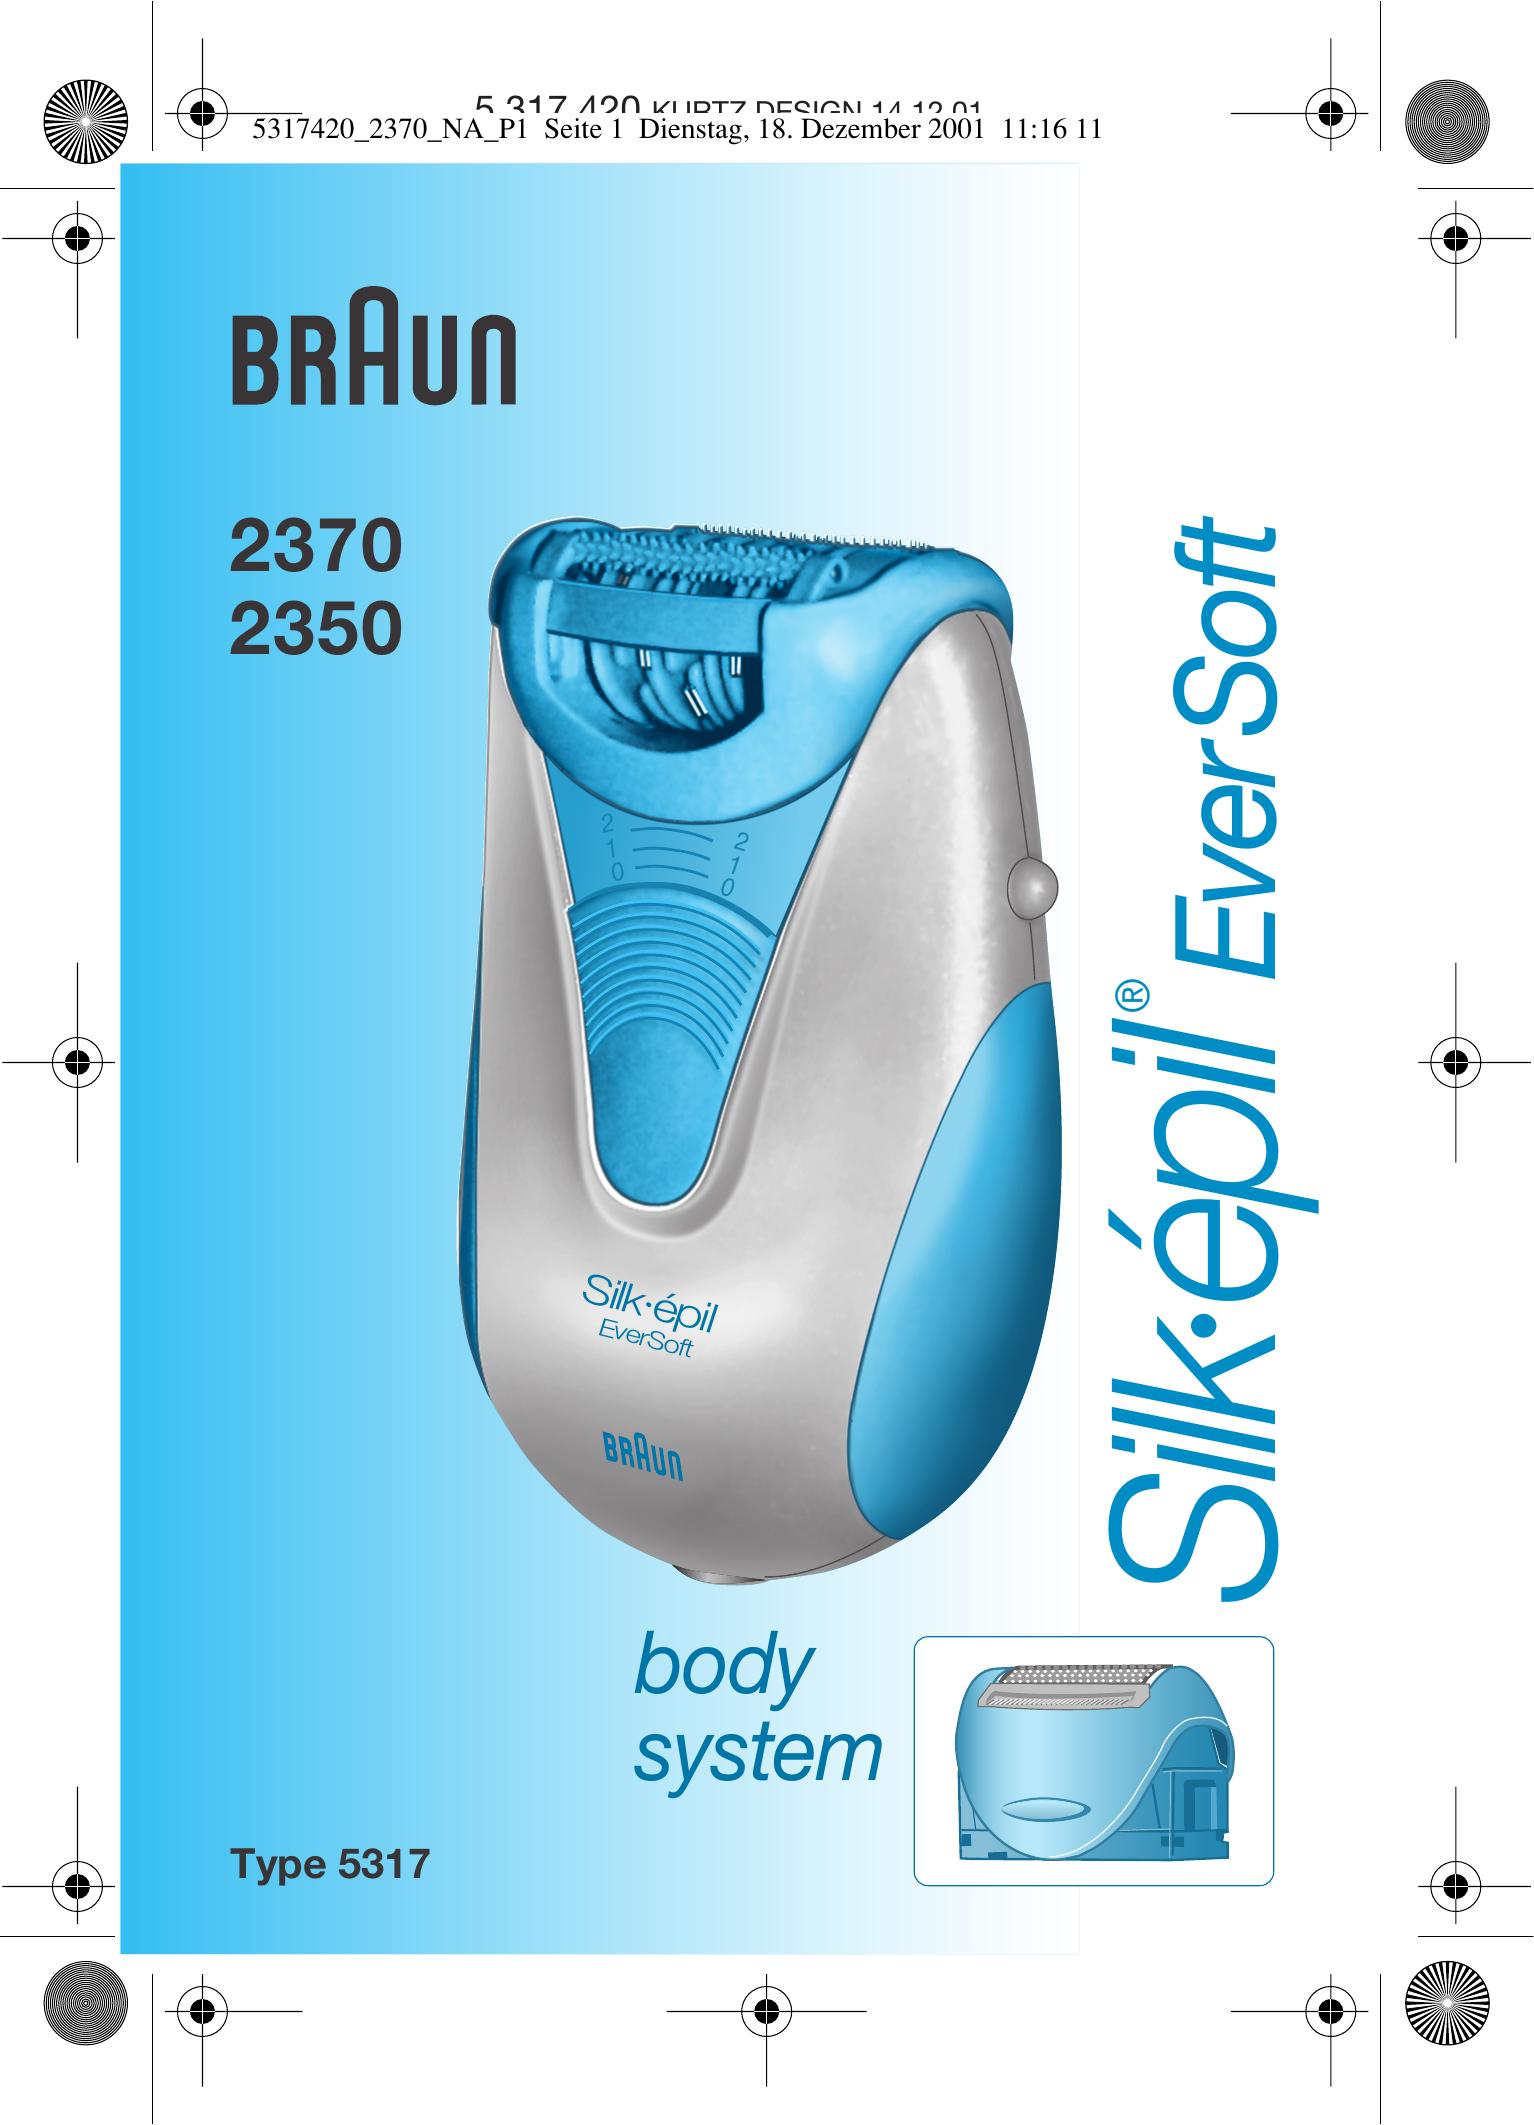 Braun 2370 Electric Shaver User Manual